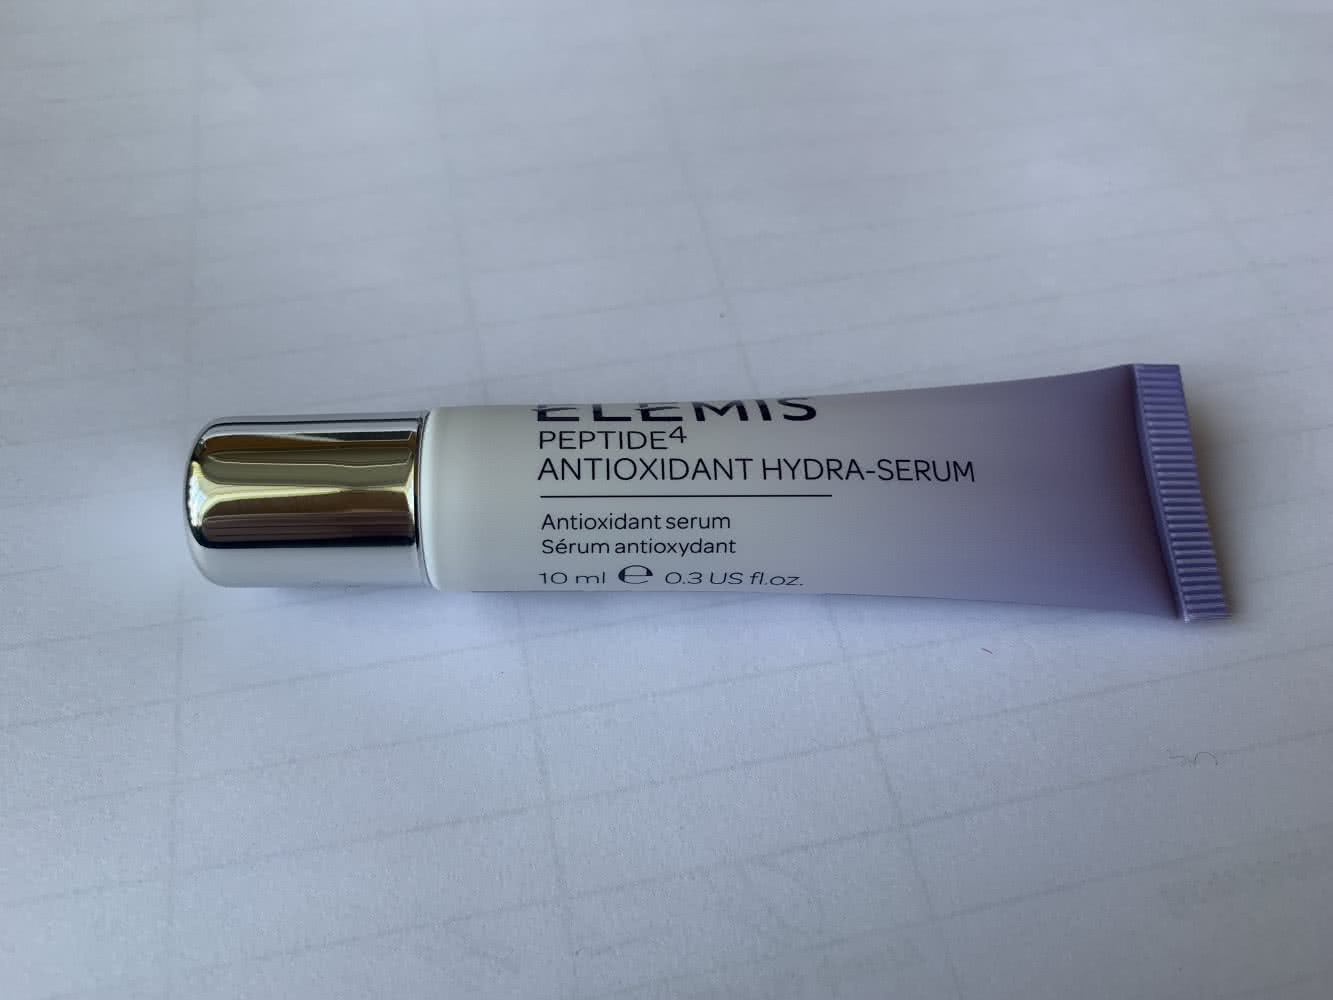 ELEMIS, peptide⁴ antioxidant hydra-serum, 10ml